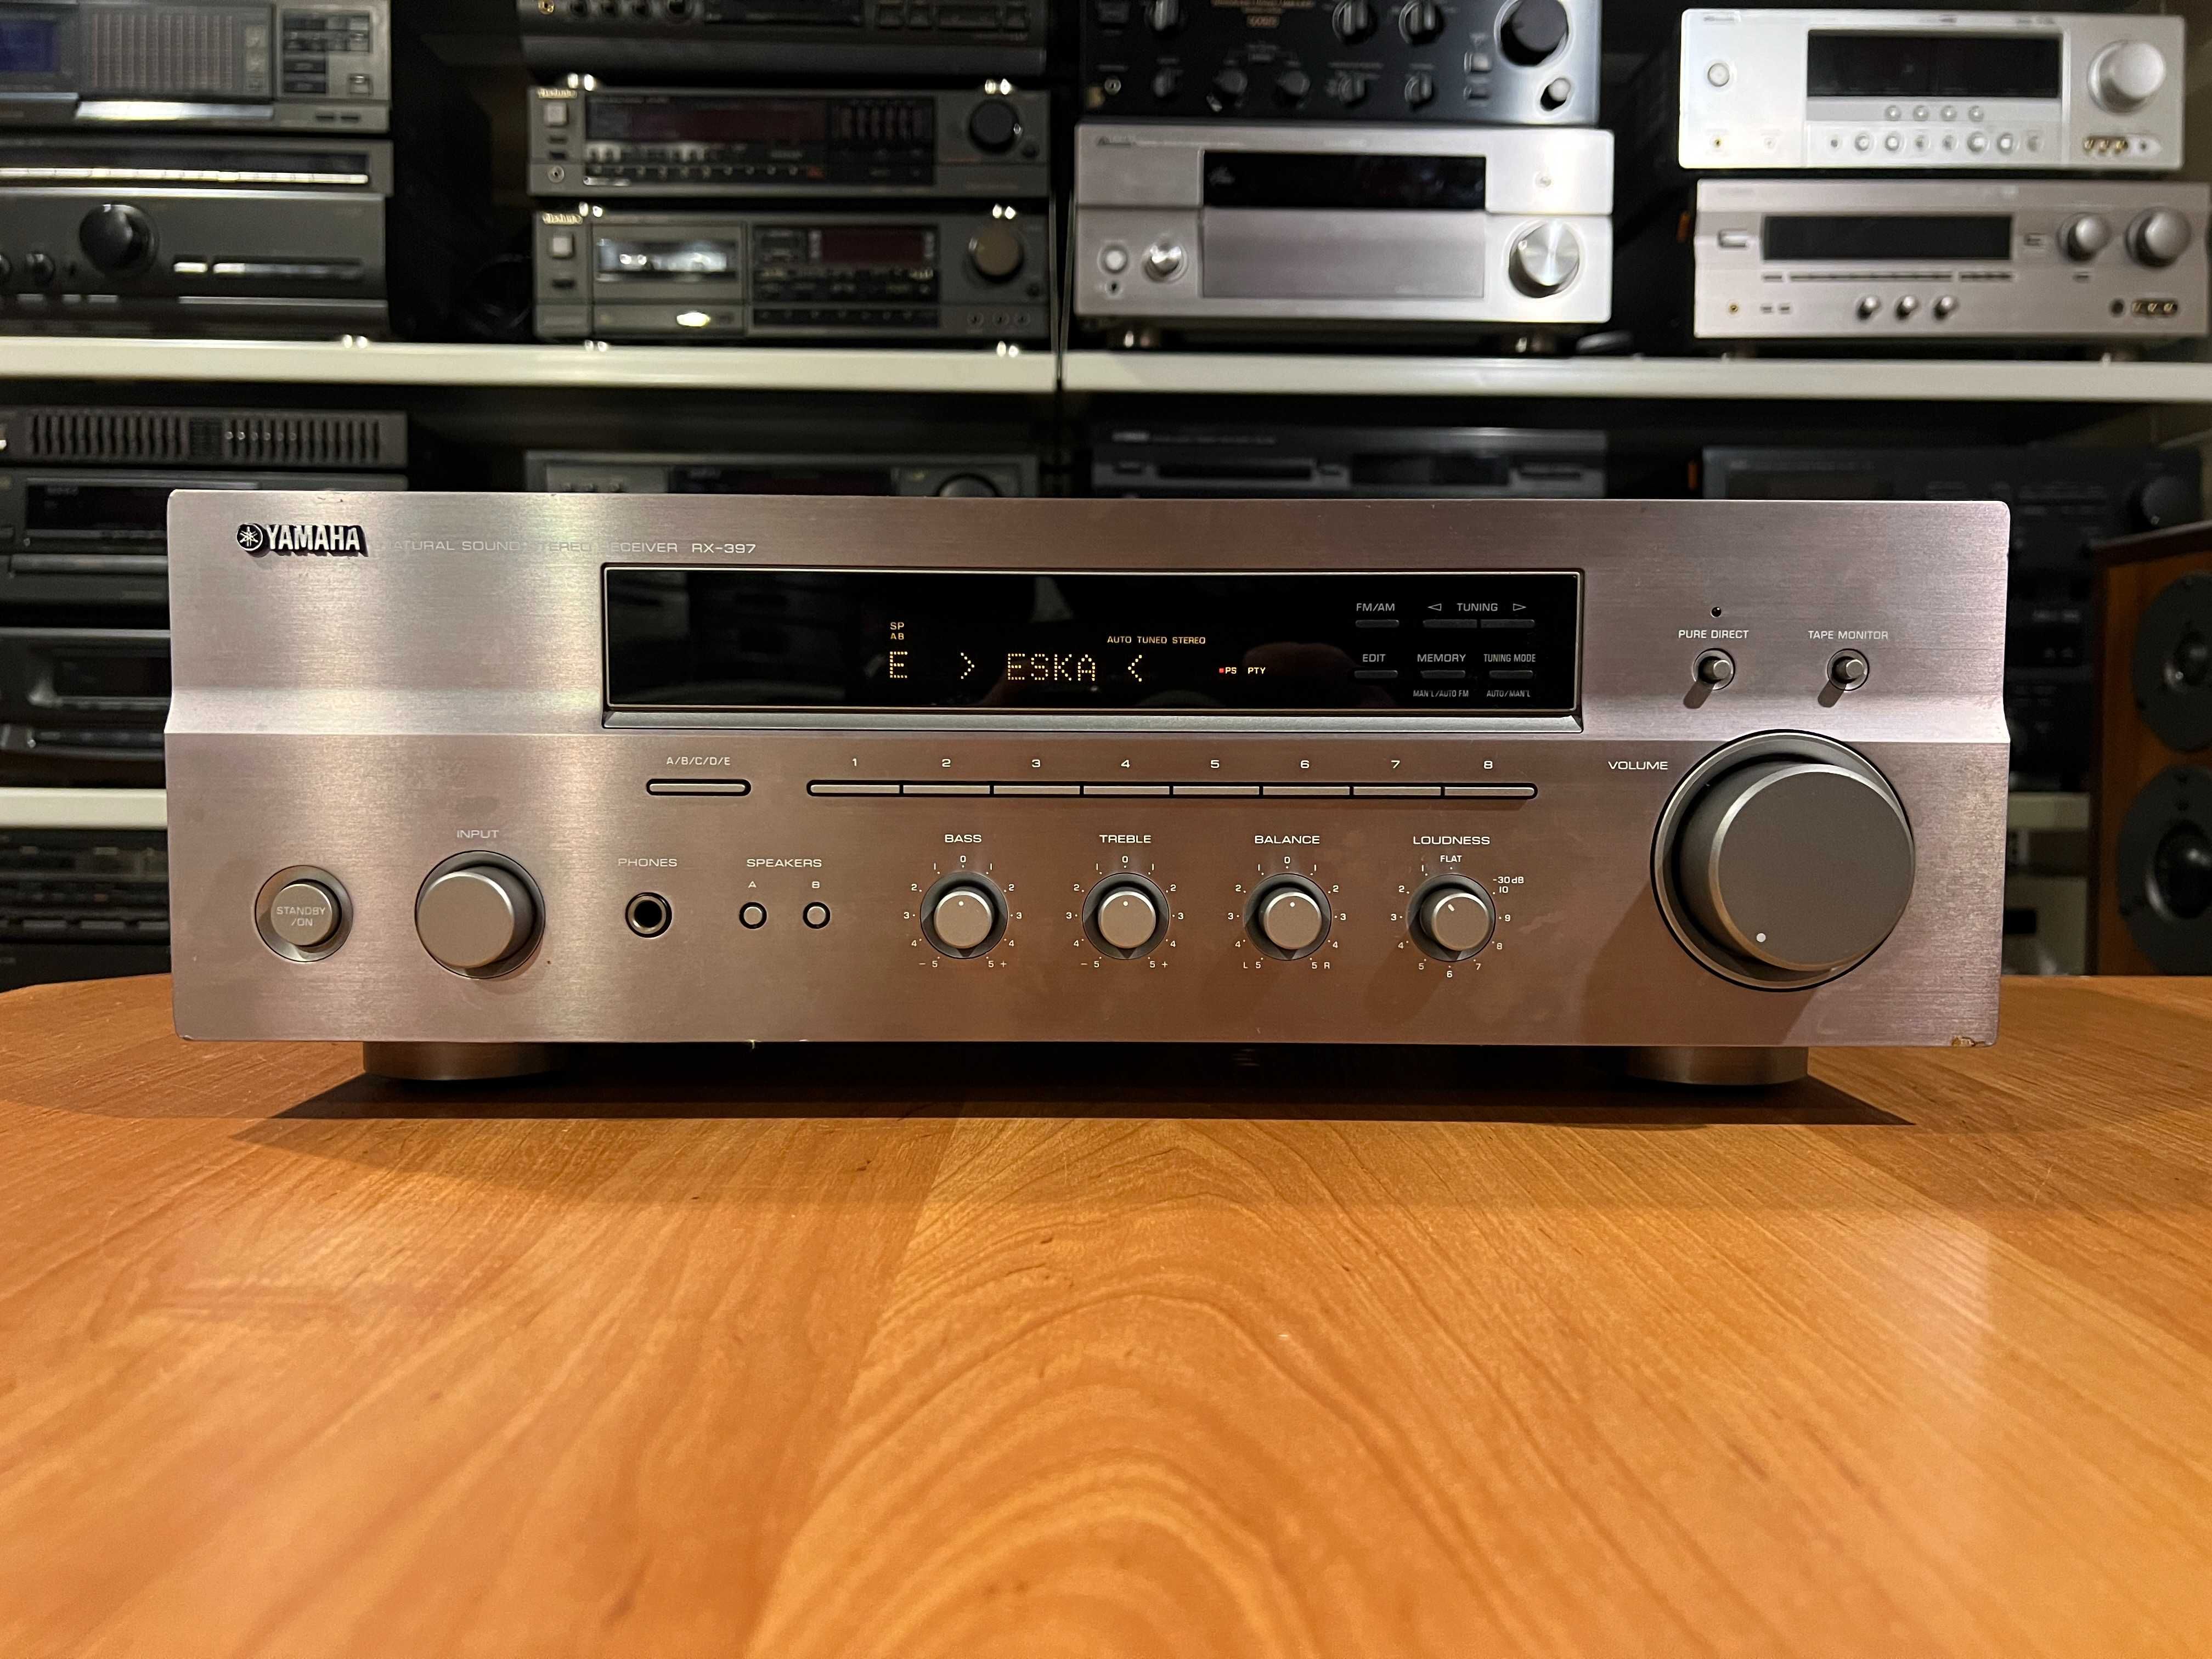 Amplituner Yamaha RX-397 Stereo Audio Room